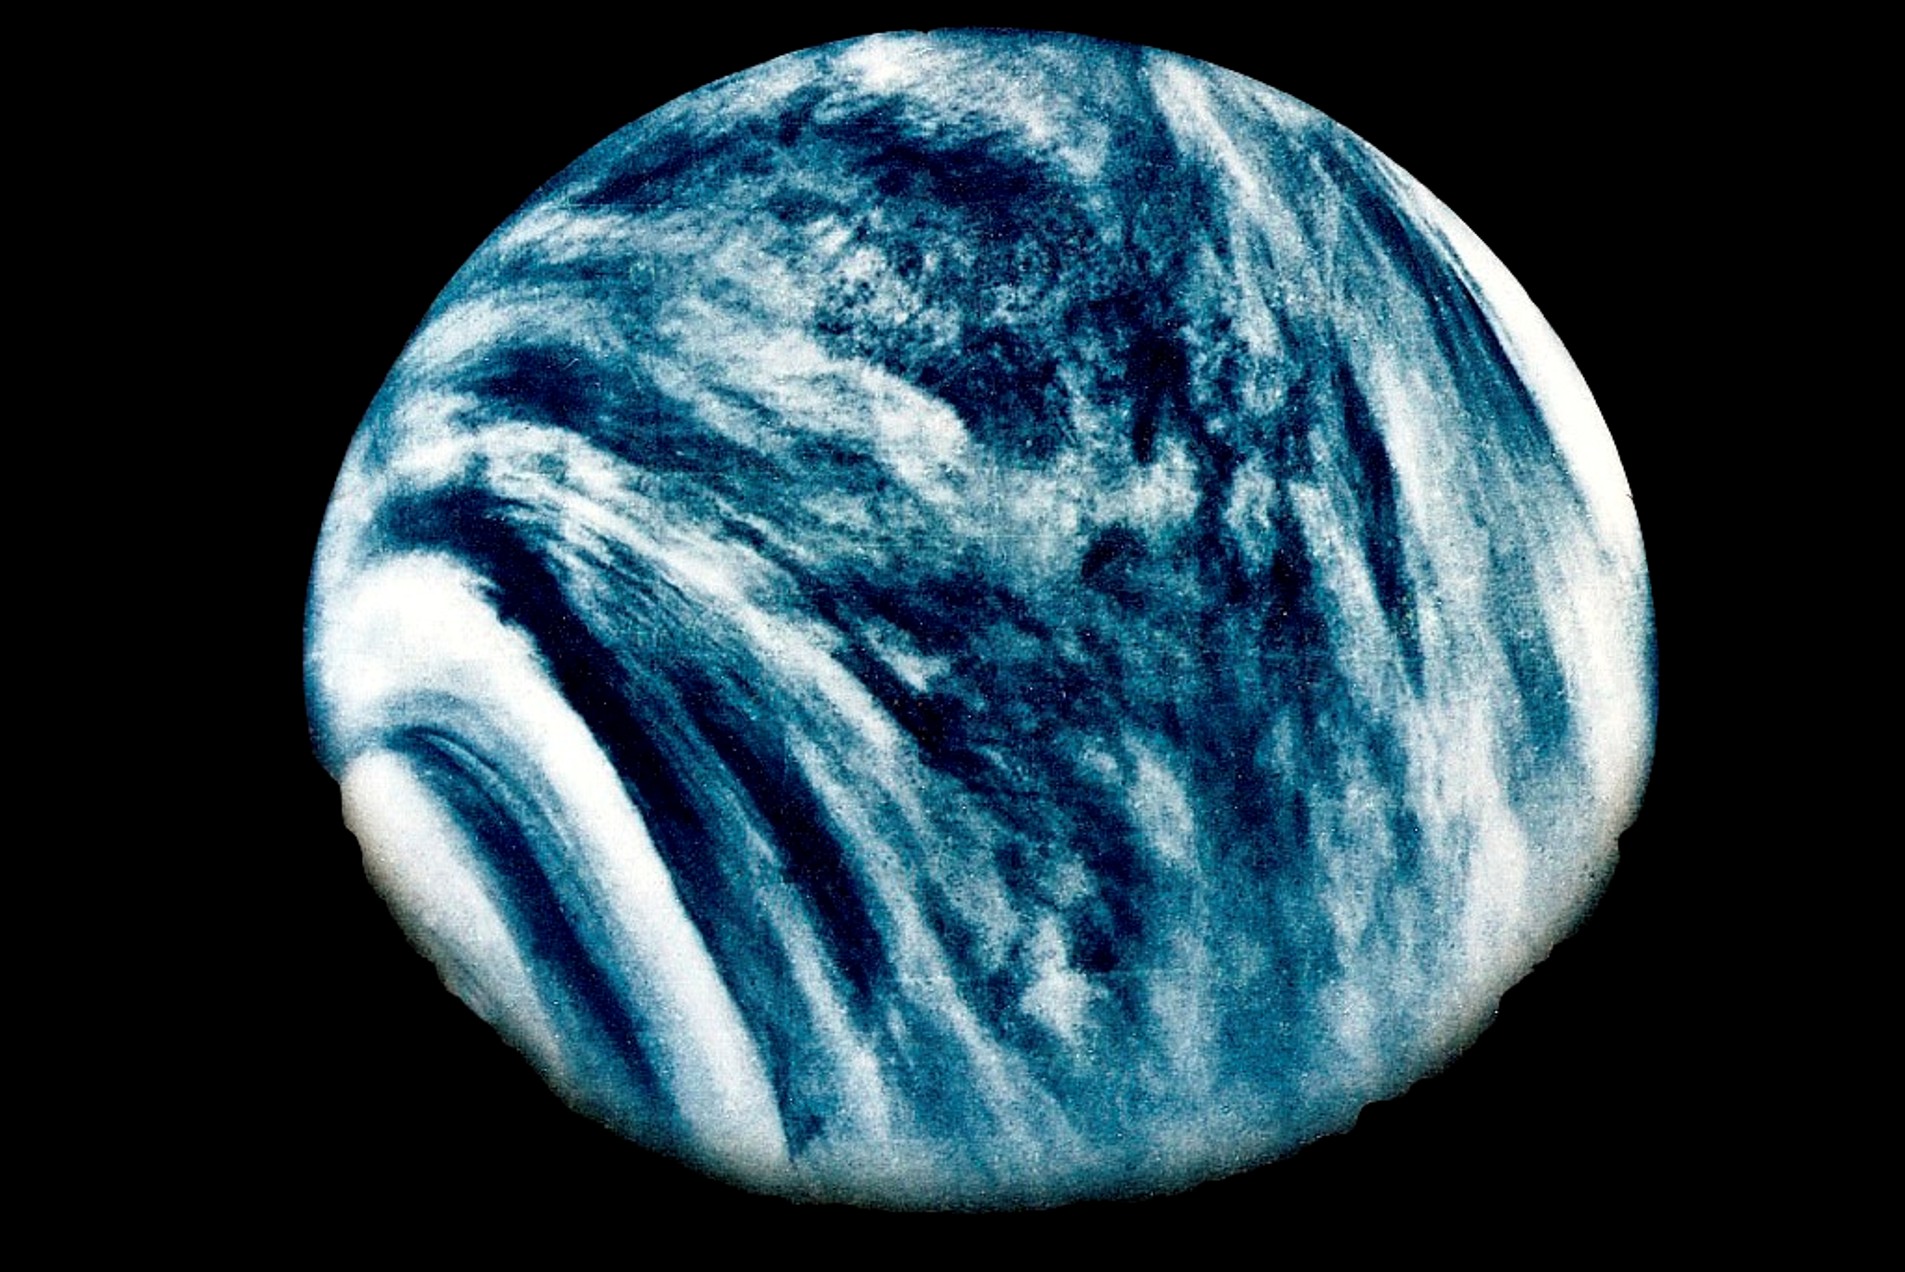 Vénus photographiée le 5 février 1974 par la sonde Mariner 10 de la Nasa. © Nasa